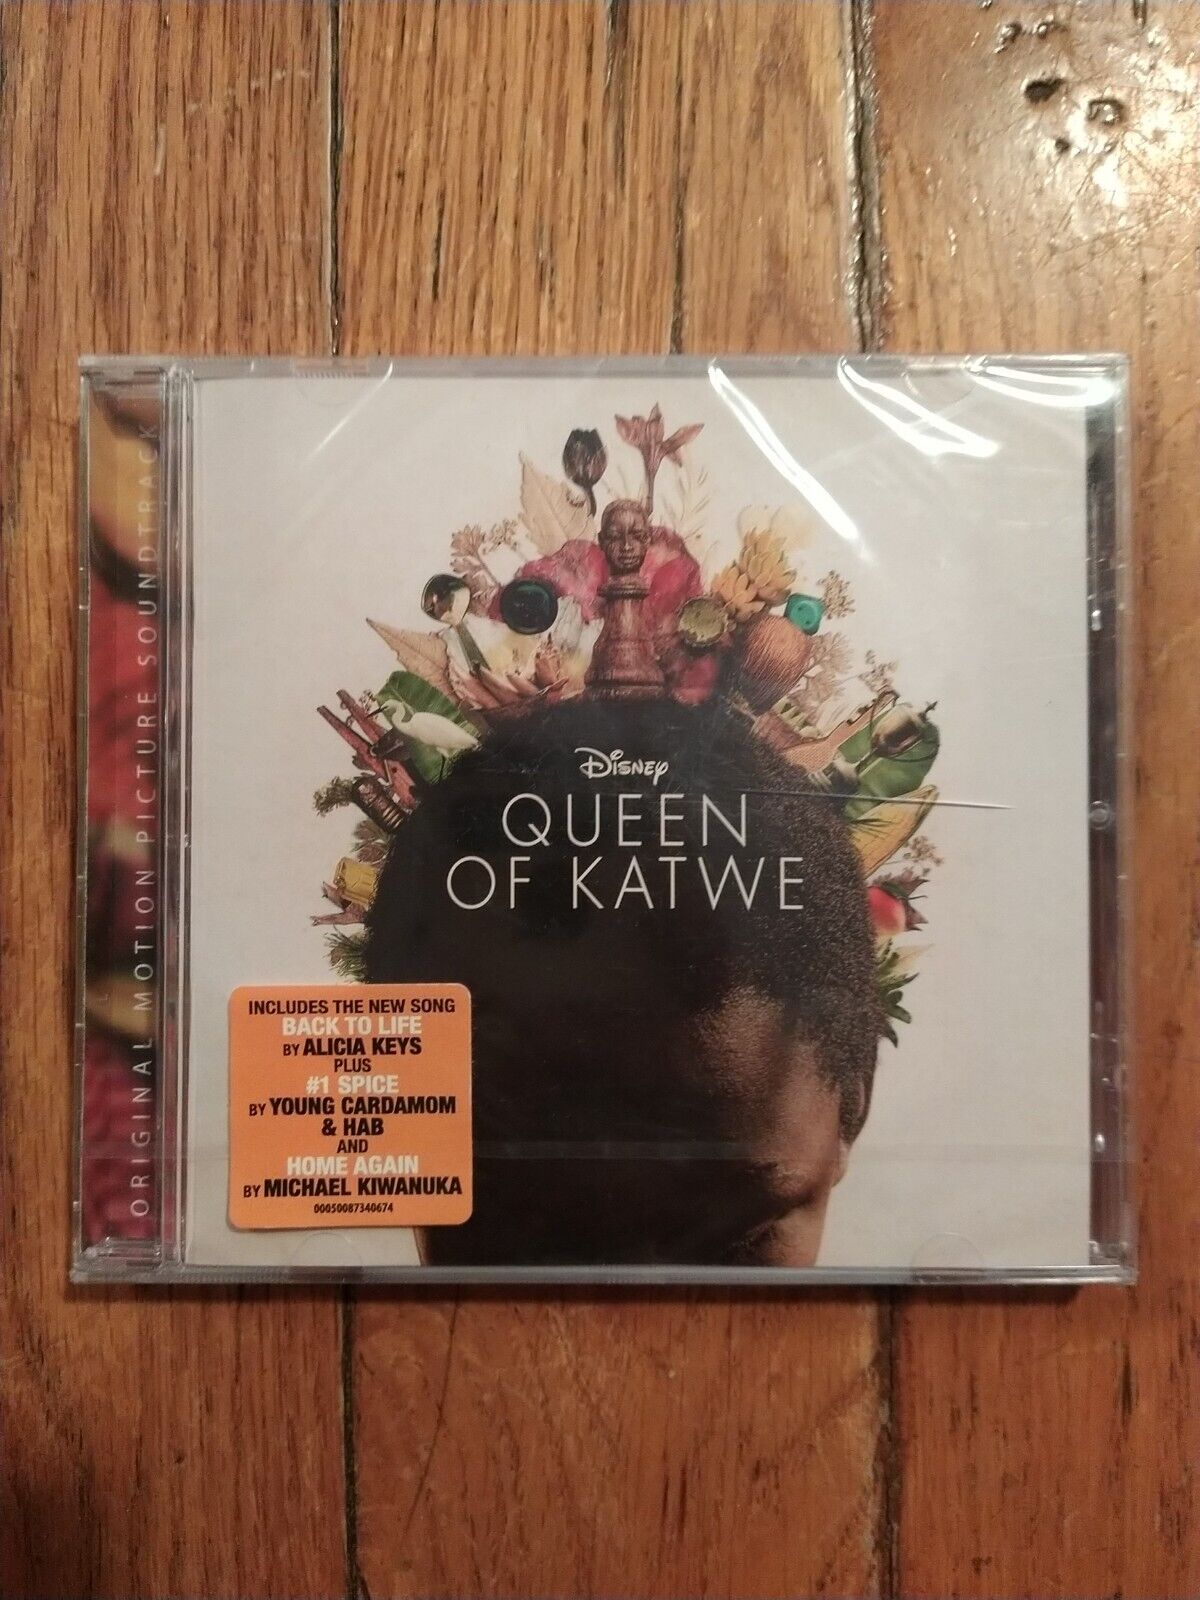 Queen of Katwe (Original Soundtrack) by Various Artists (CD, 2016) New Disney